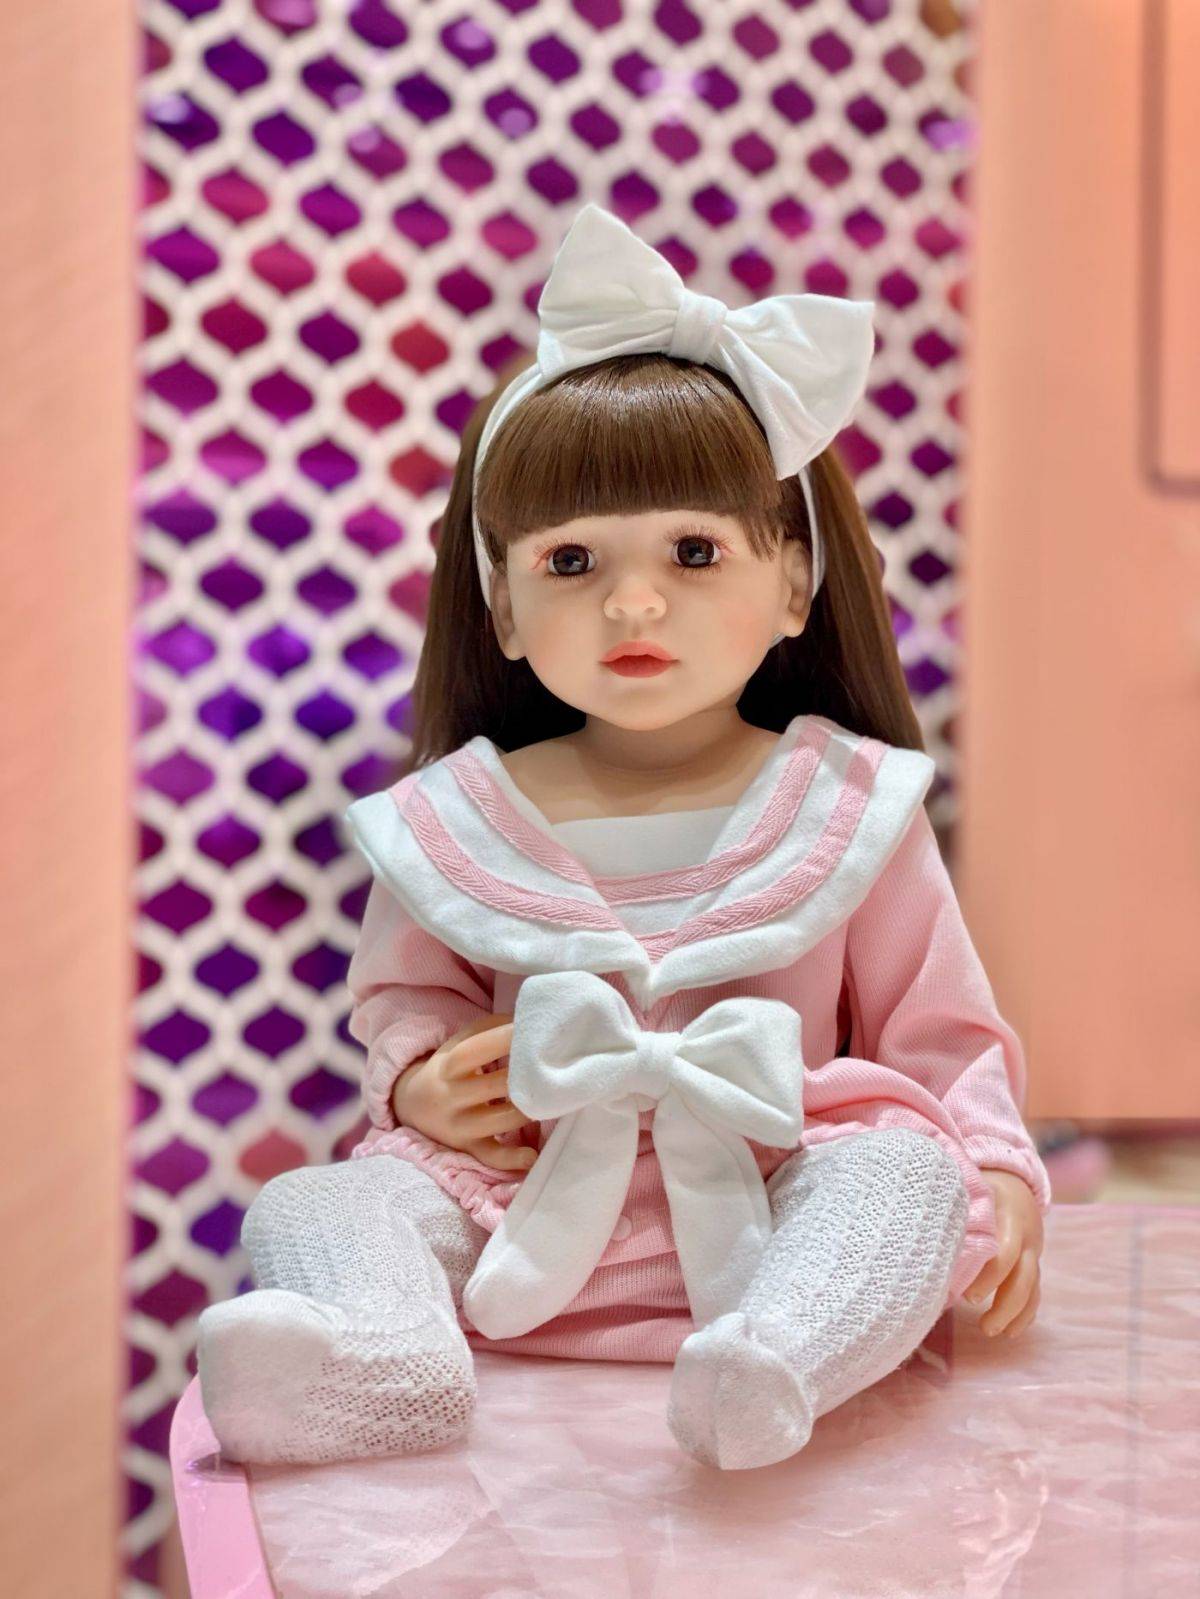 Reborn Baby Dolls Silicone Cute Soft Babies Doll ဖက်ရှင် Bebe Reborn Dolls 55cm မိန်းကလေးများအတွက် အရုပ်များ (10)